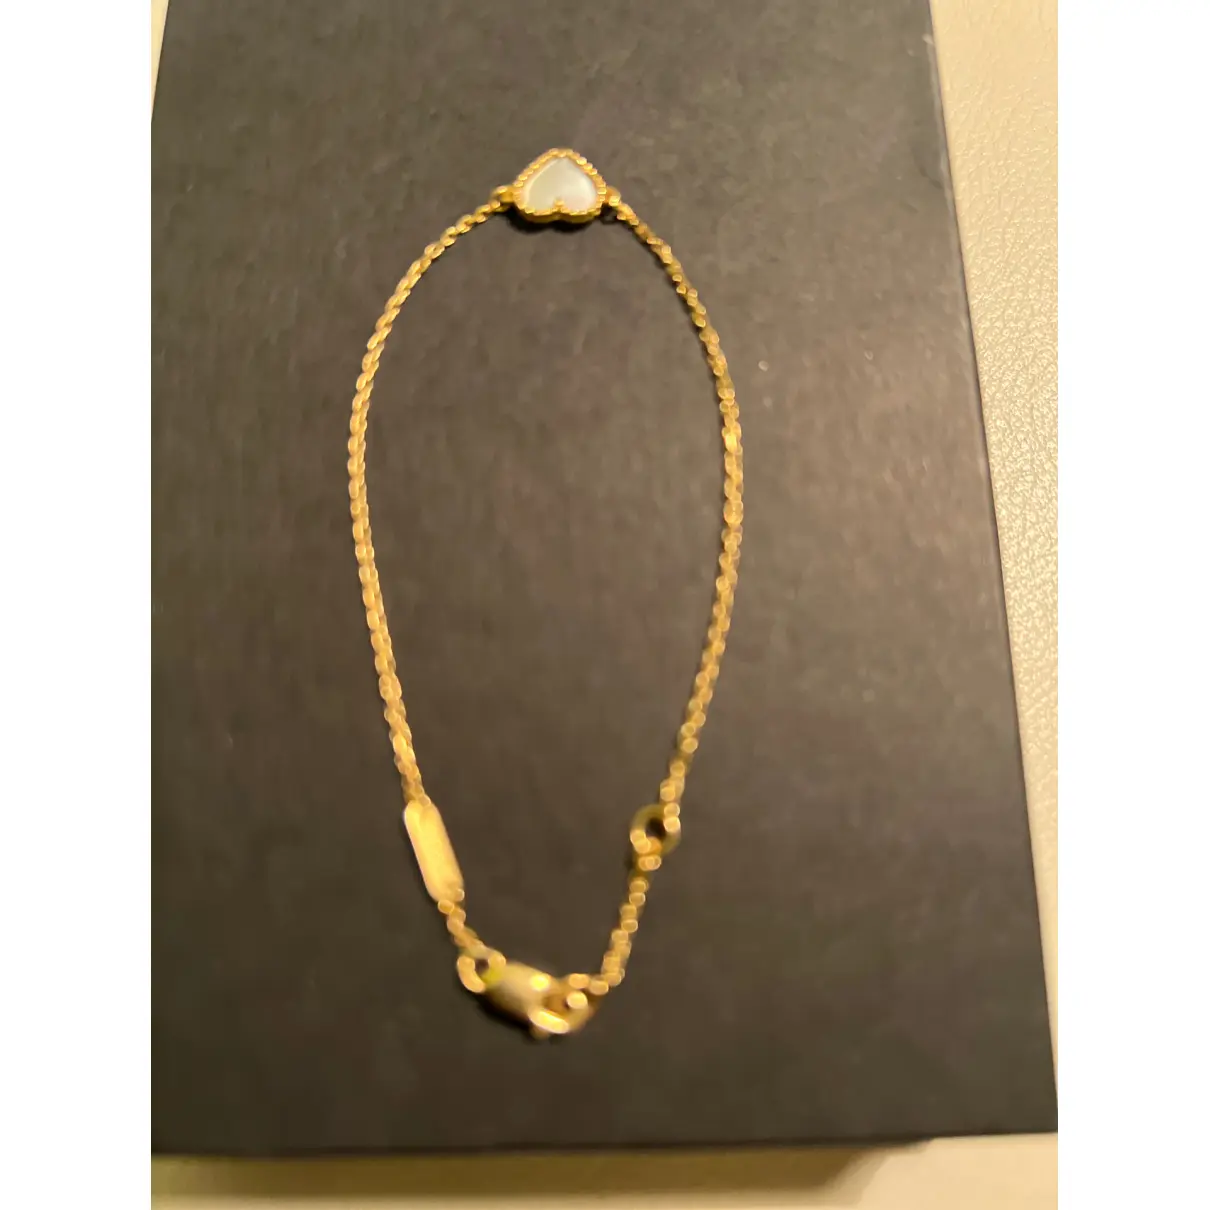 Buy Van Cleef & Arpels Sweet Alhambra yellow gold bracelet online